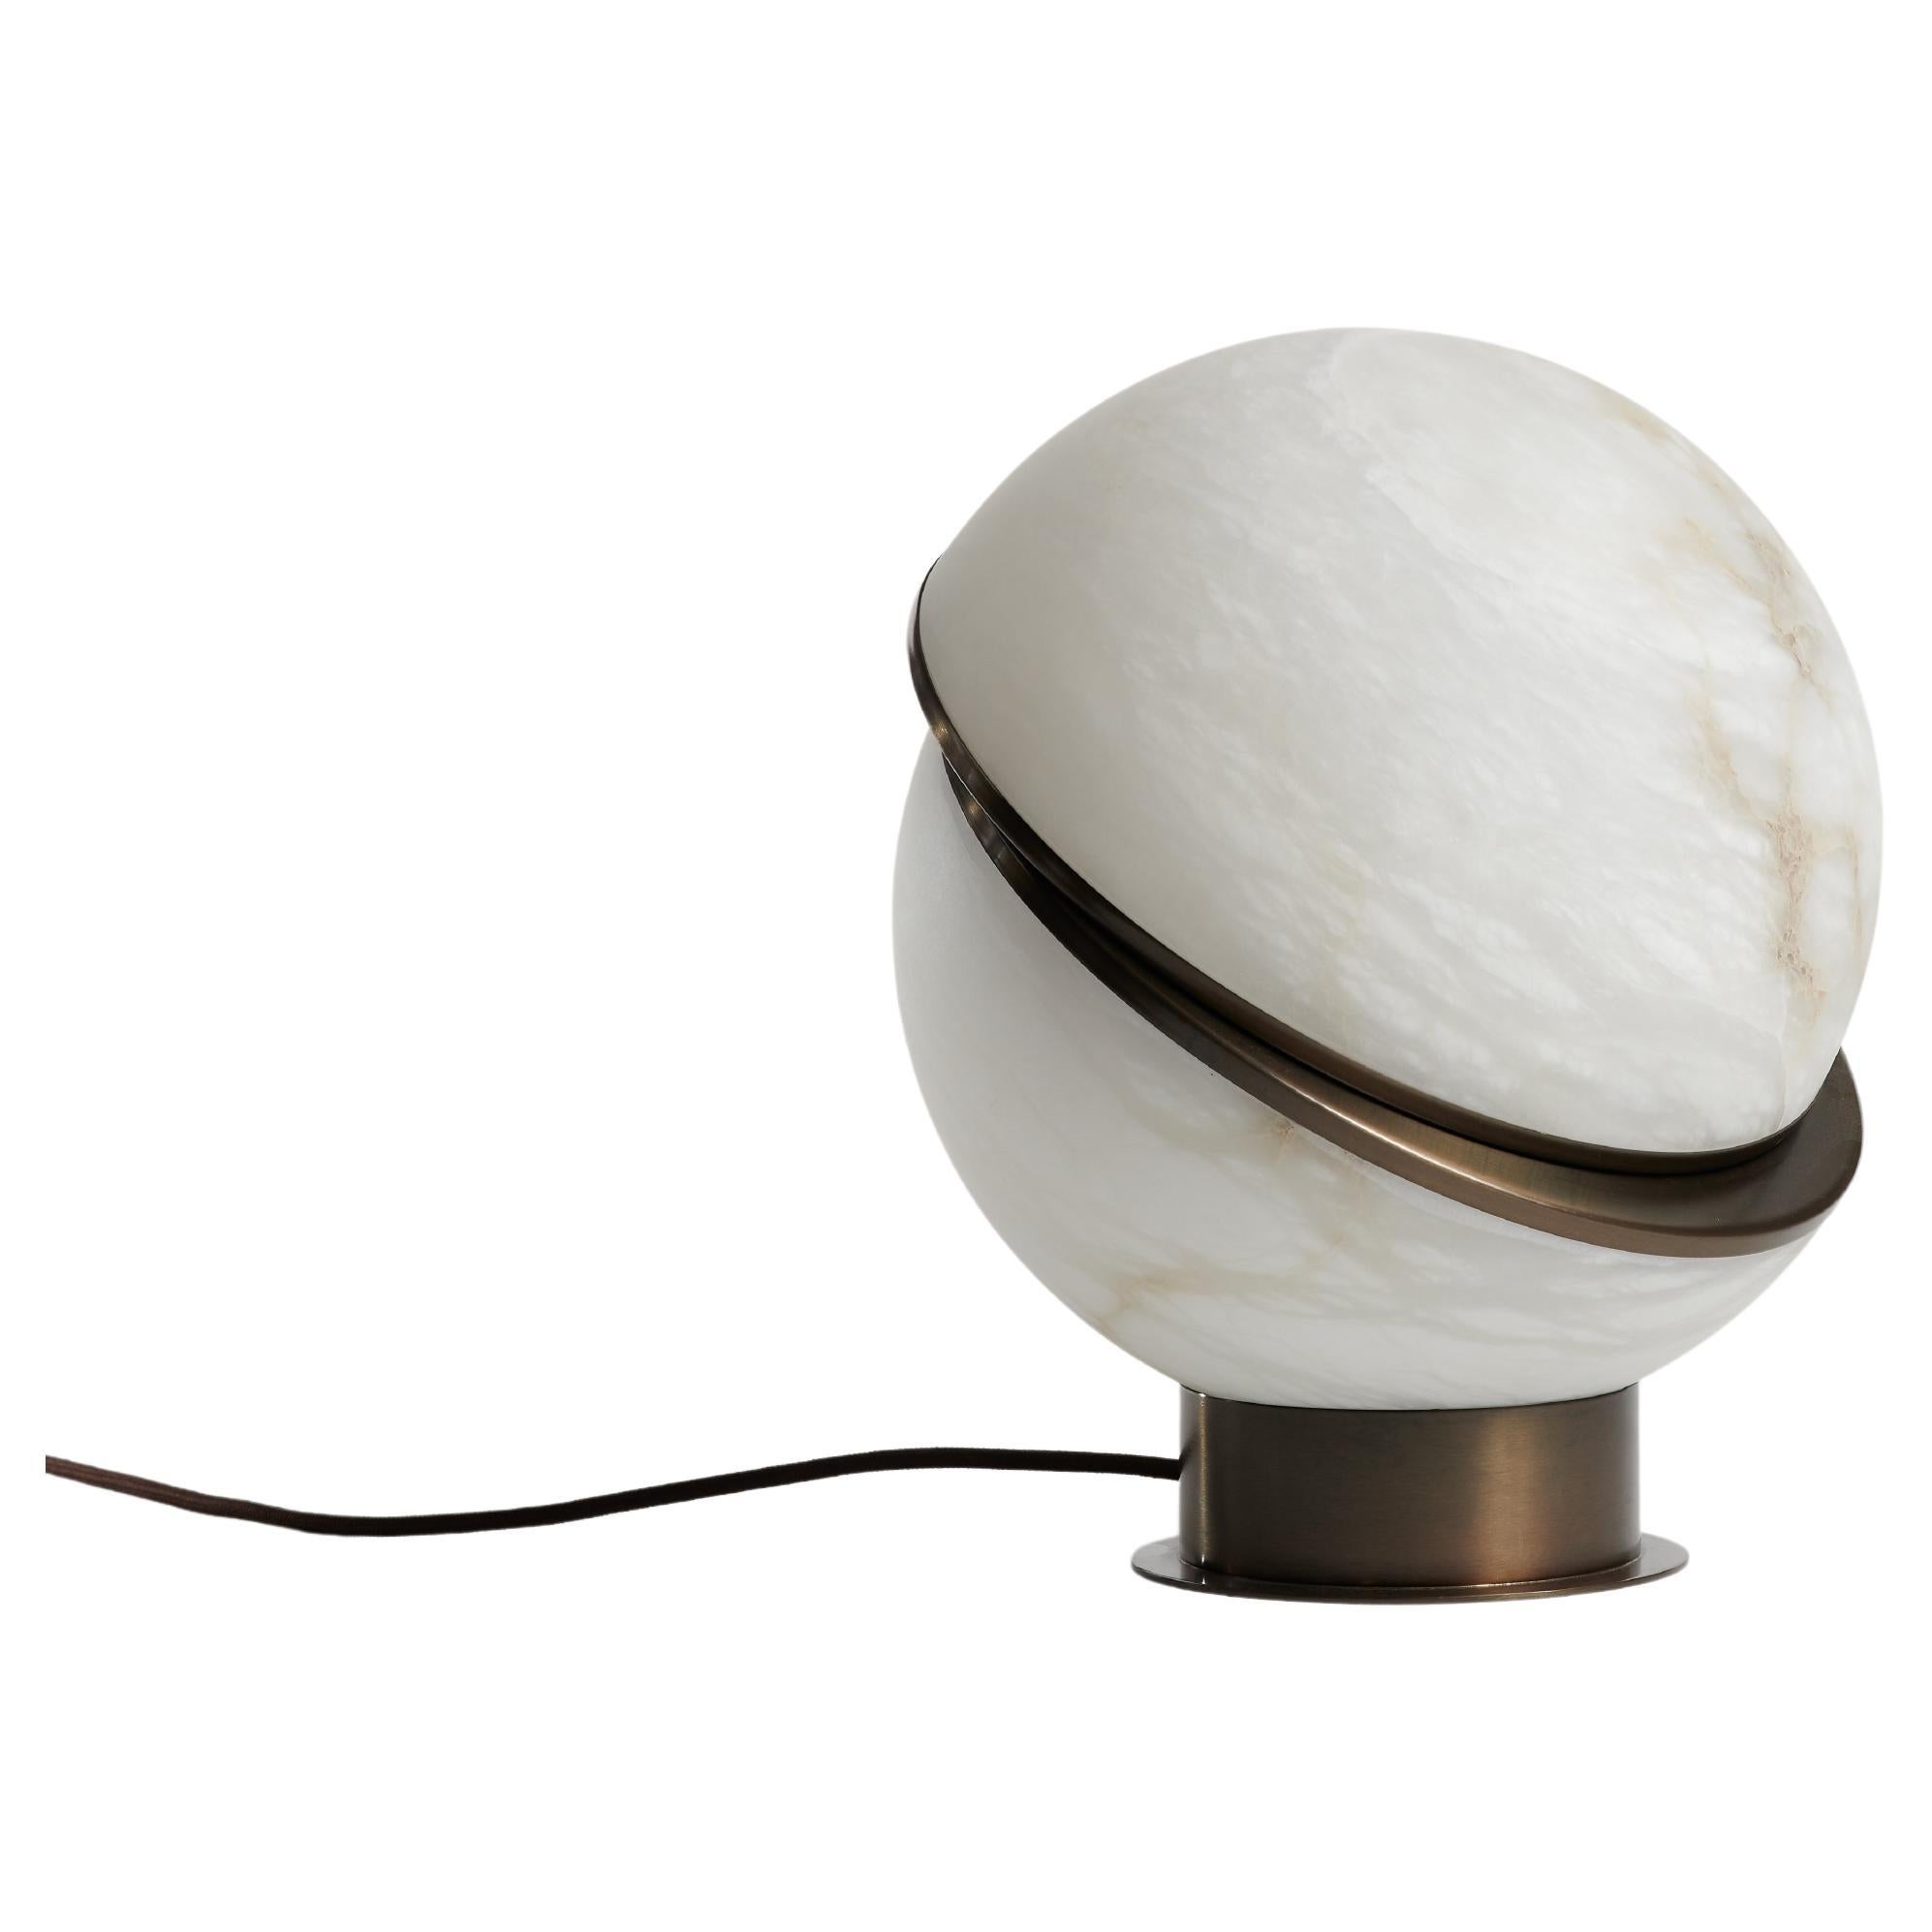 Modern Italian Ethereal Allure of Alabaster - Offset Globe Lamp in bronze